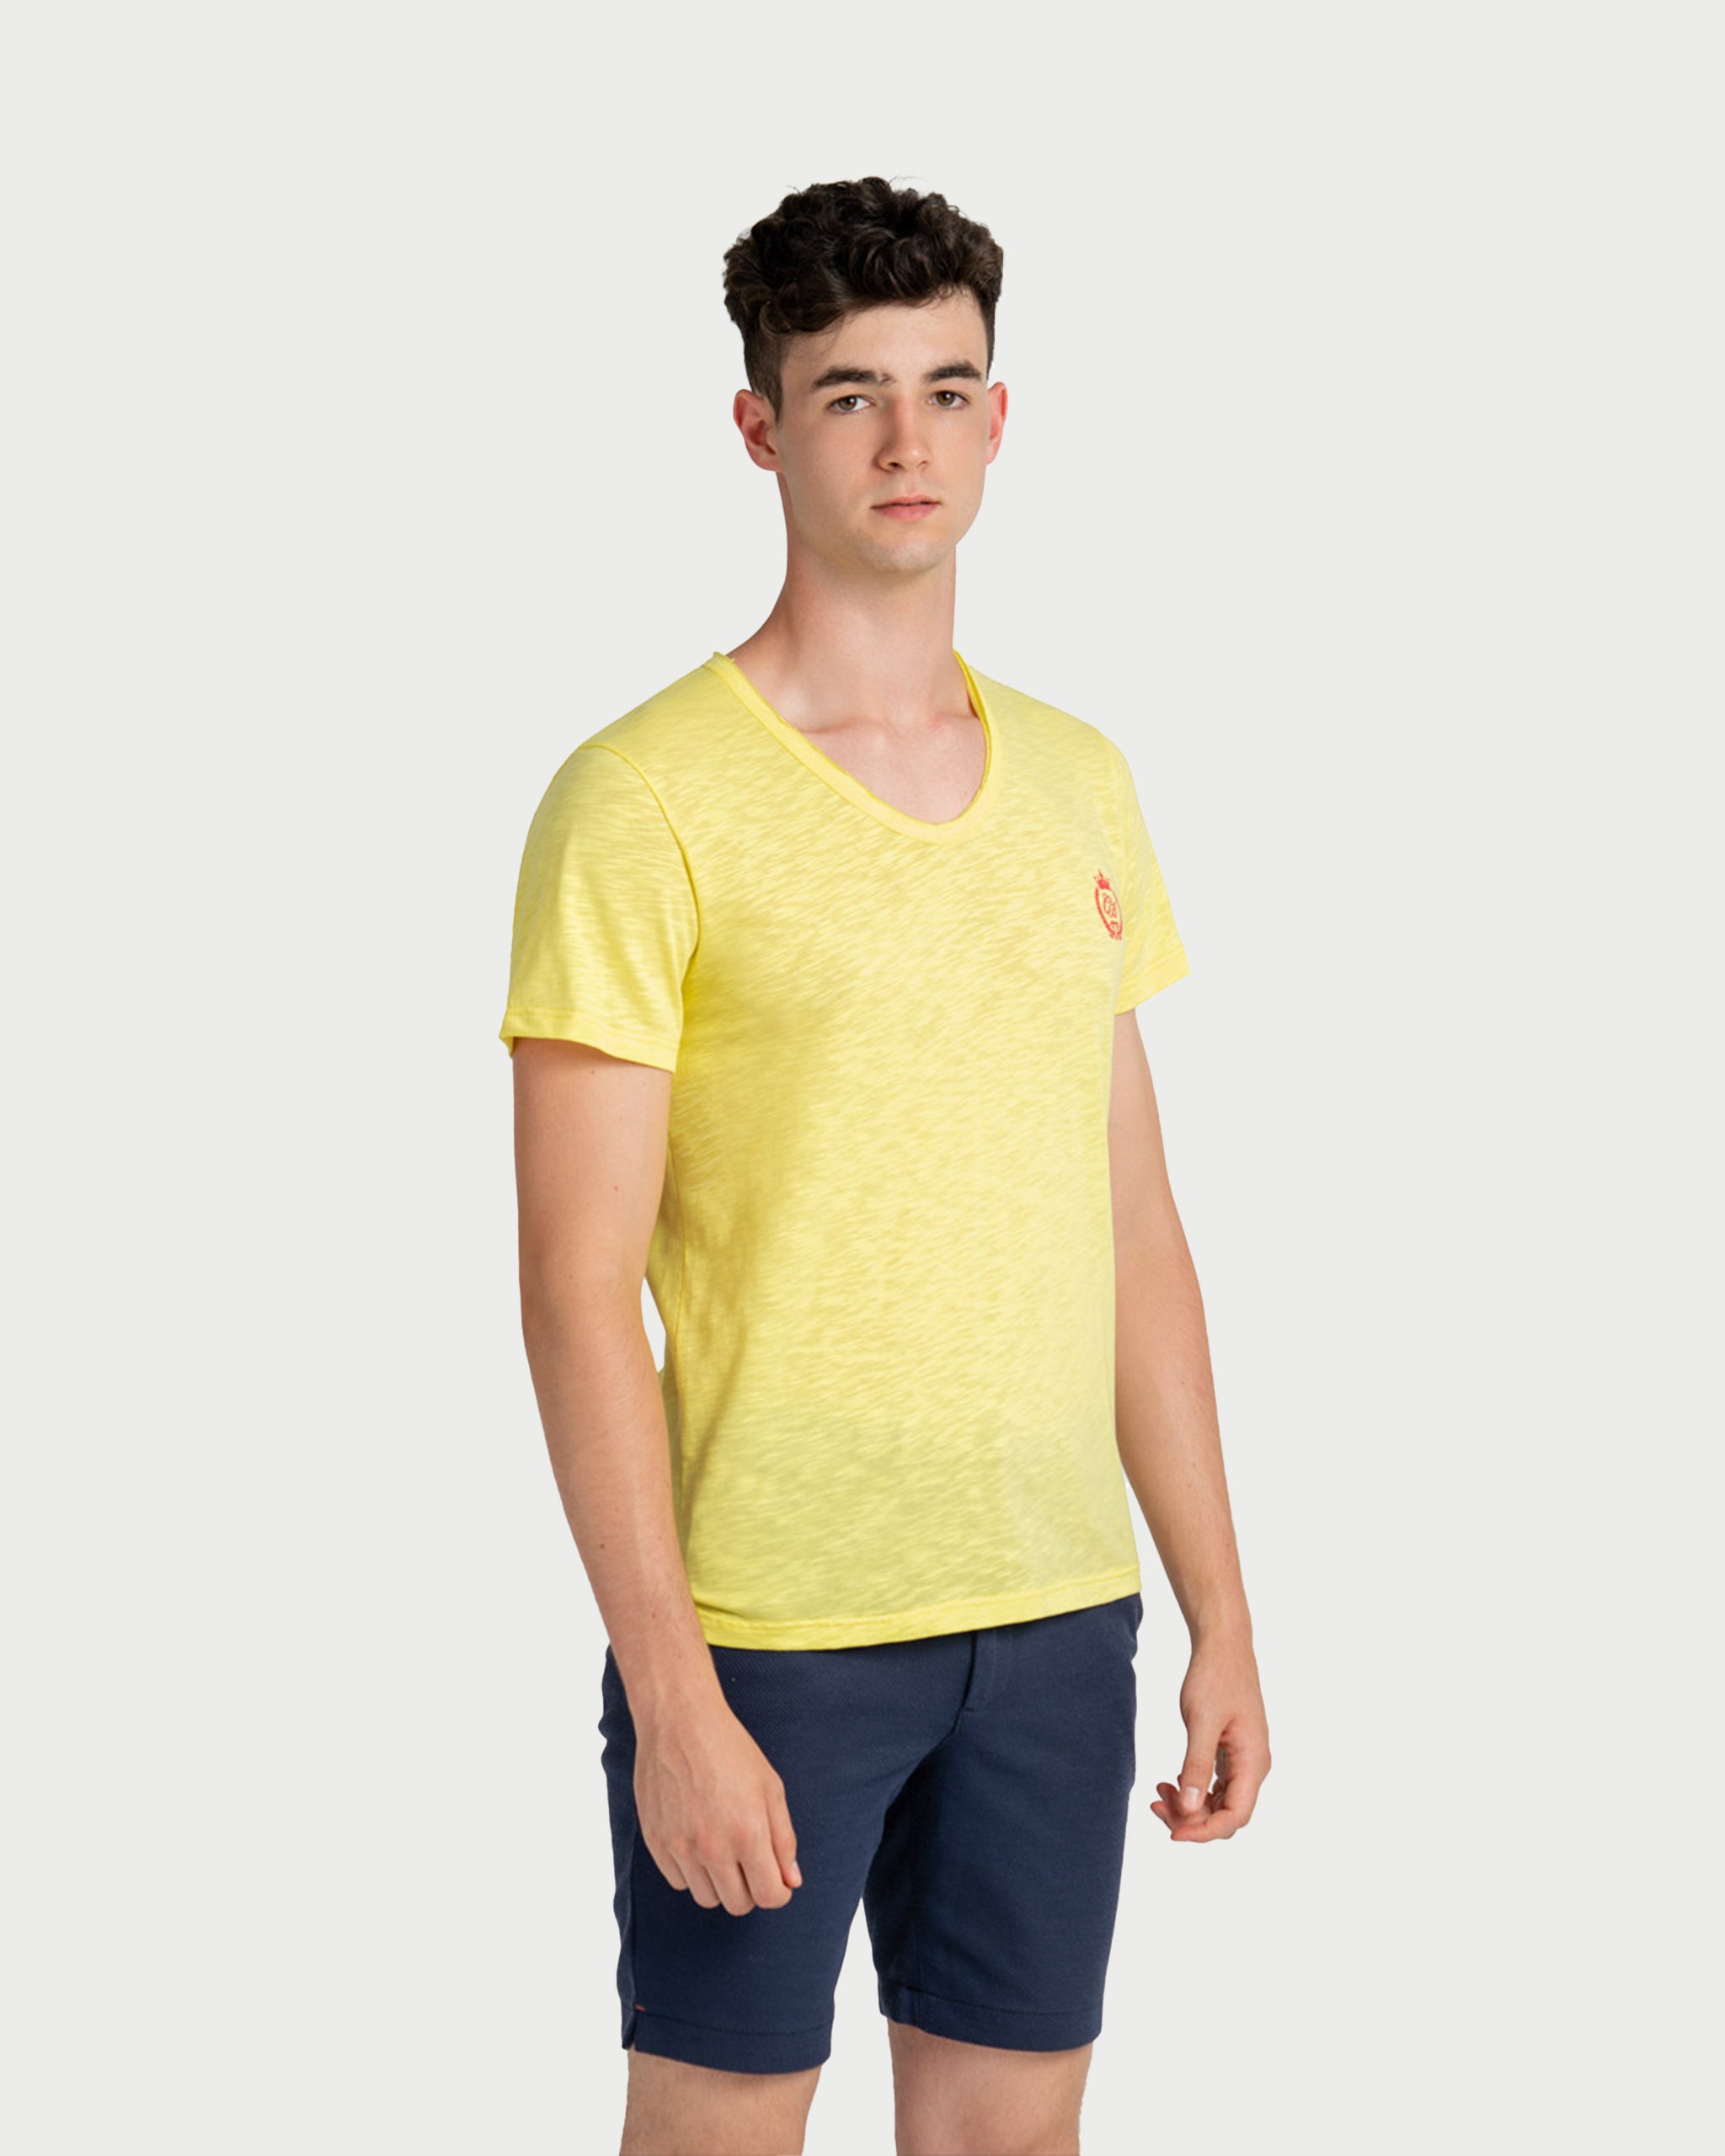 YELLOW VANITY - tricou din bumbac premium